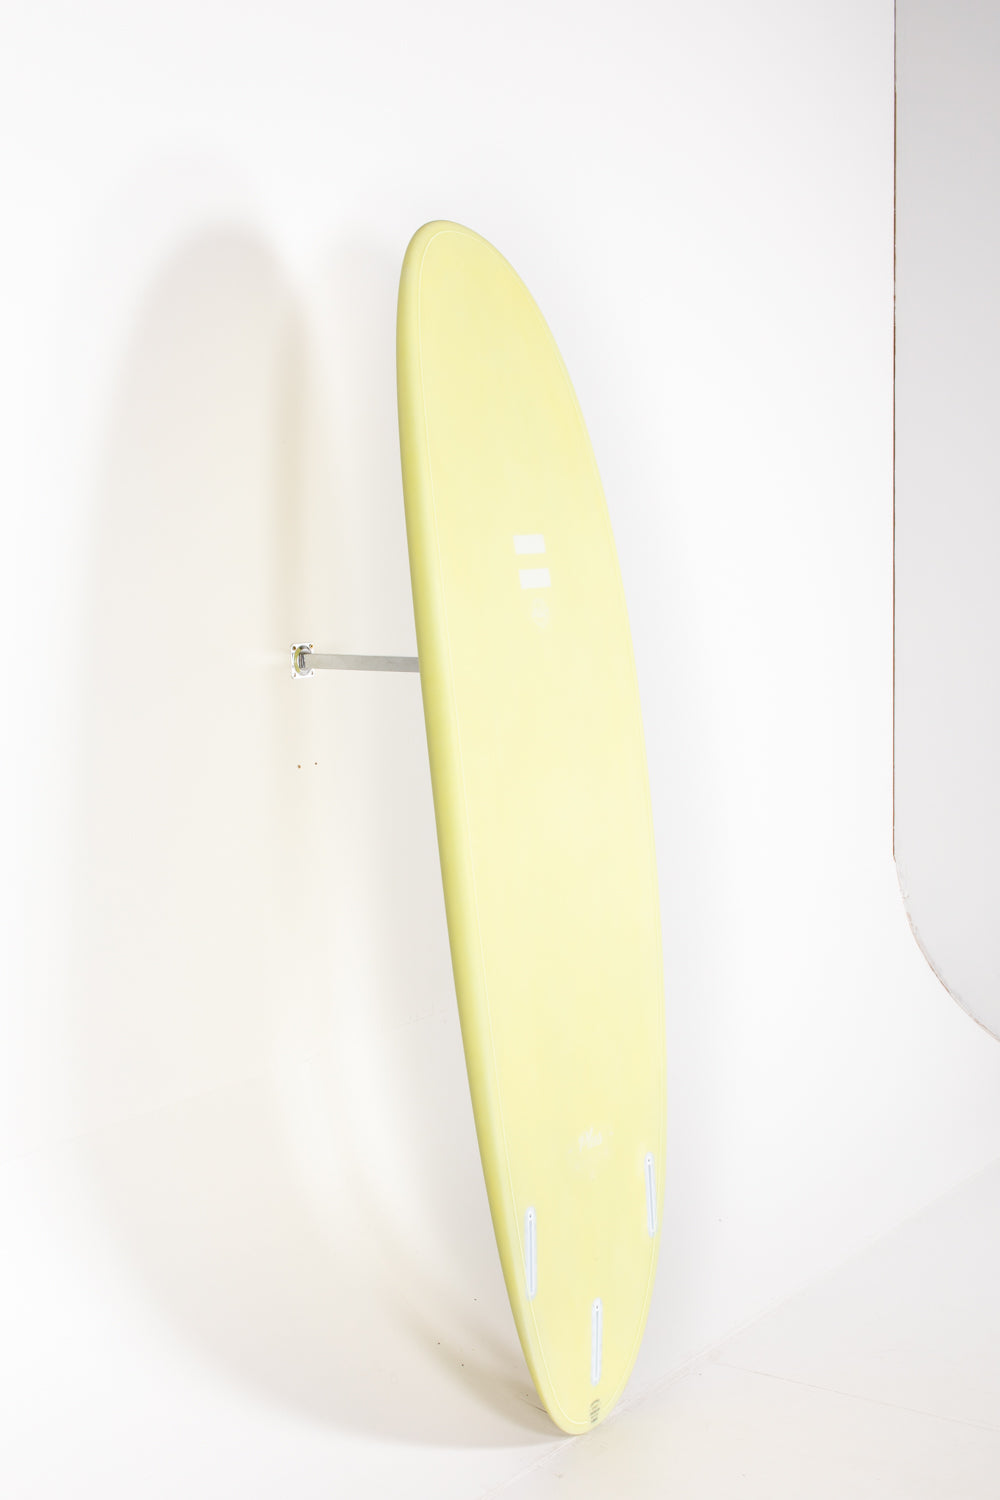 
                  
                    Pukas Surf Shop - Indio Endurance - PLUS Banana Light - 6´6" x 23 x 3 3/8 - 60L
                  
                